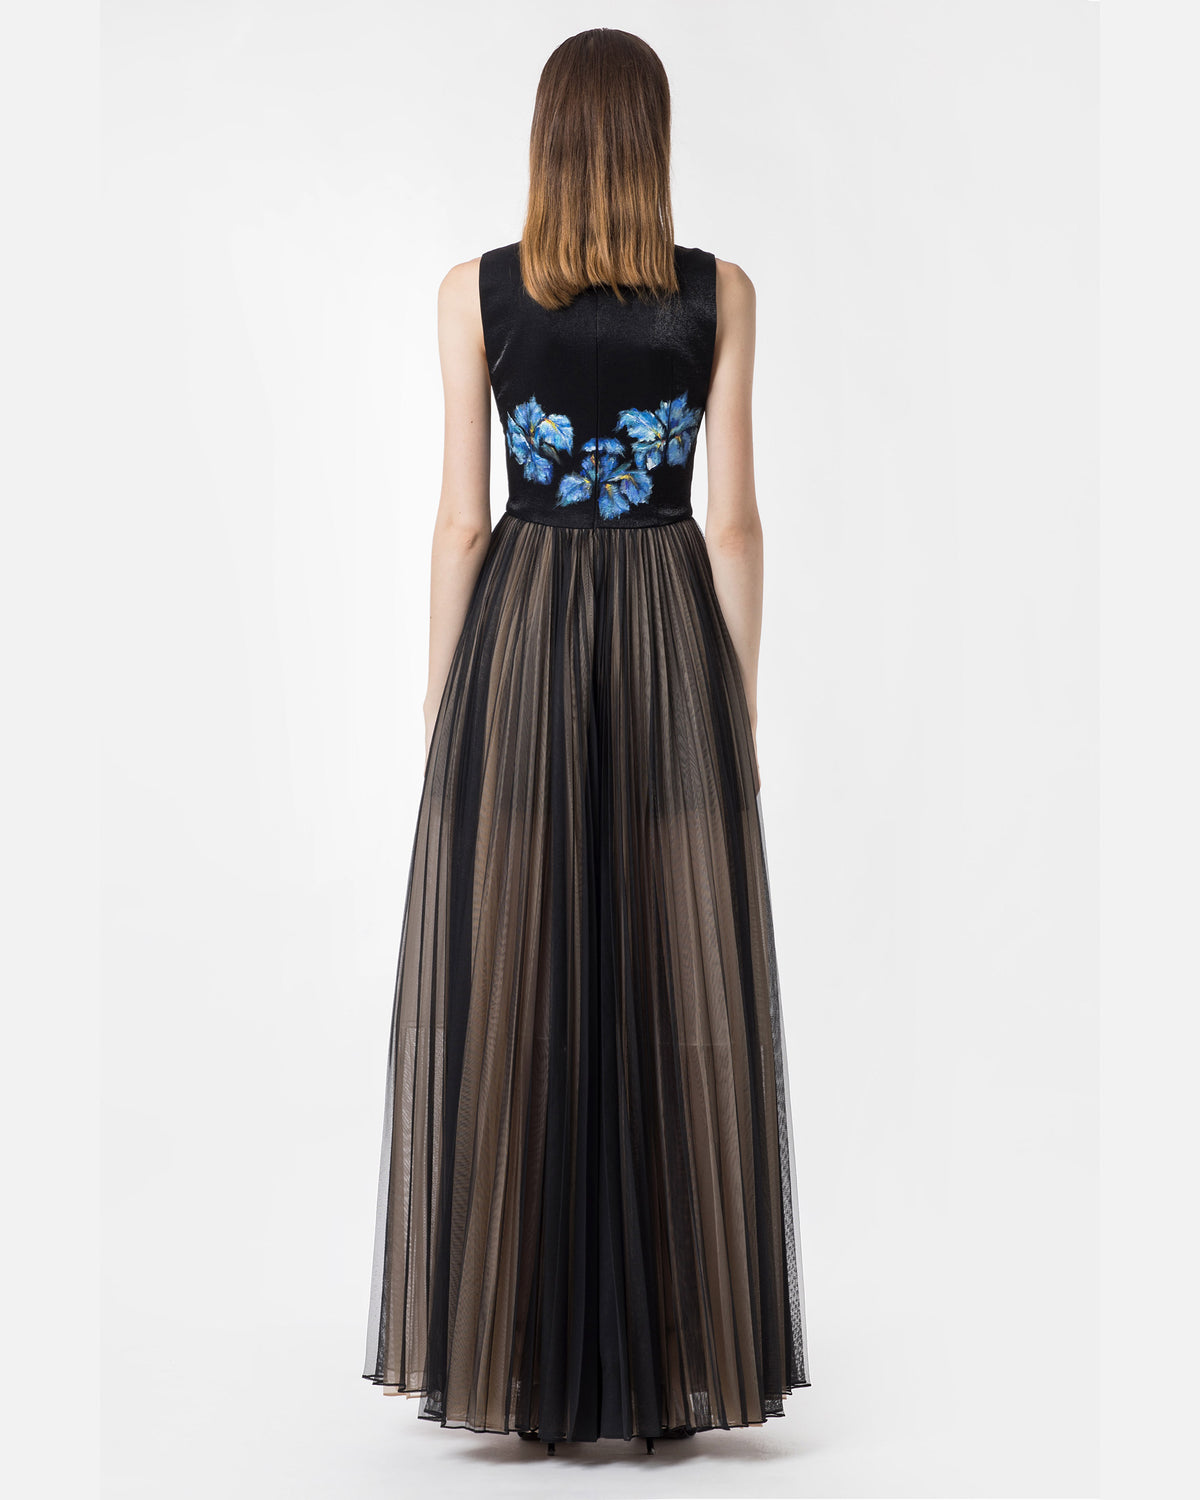 Iris-painted Sleeveless Black Gown Dress